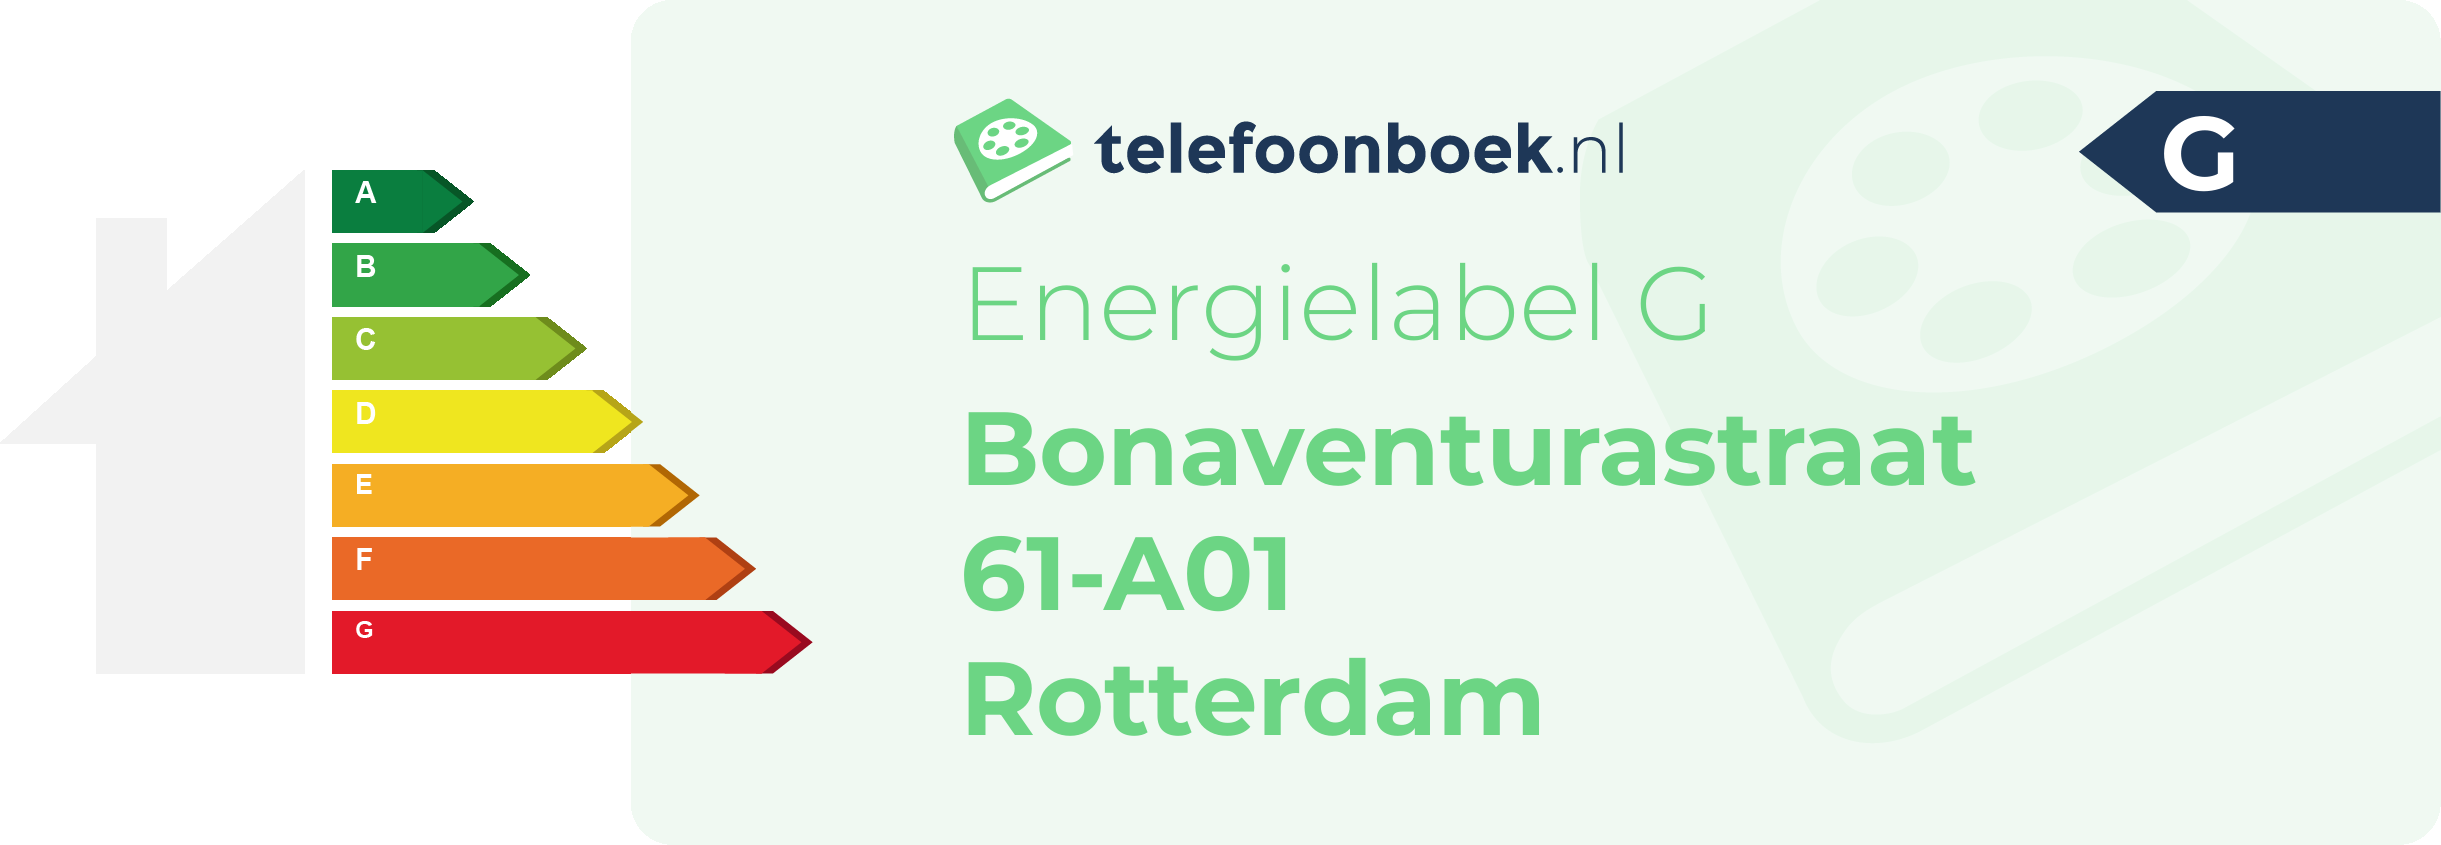 Energielabel Bonaventurastraat 61-A01 Rotterdam